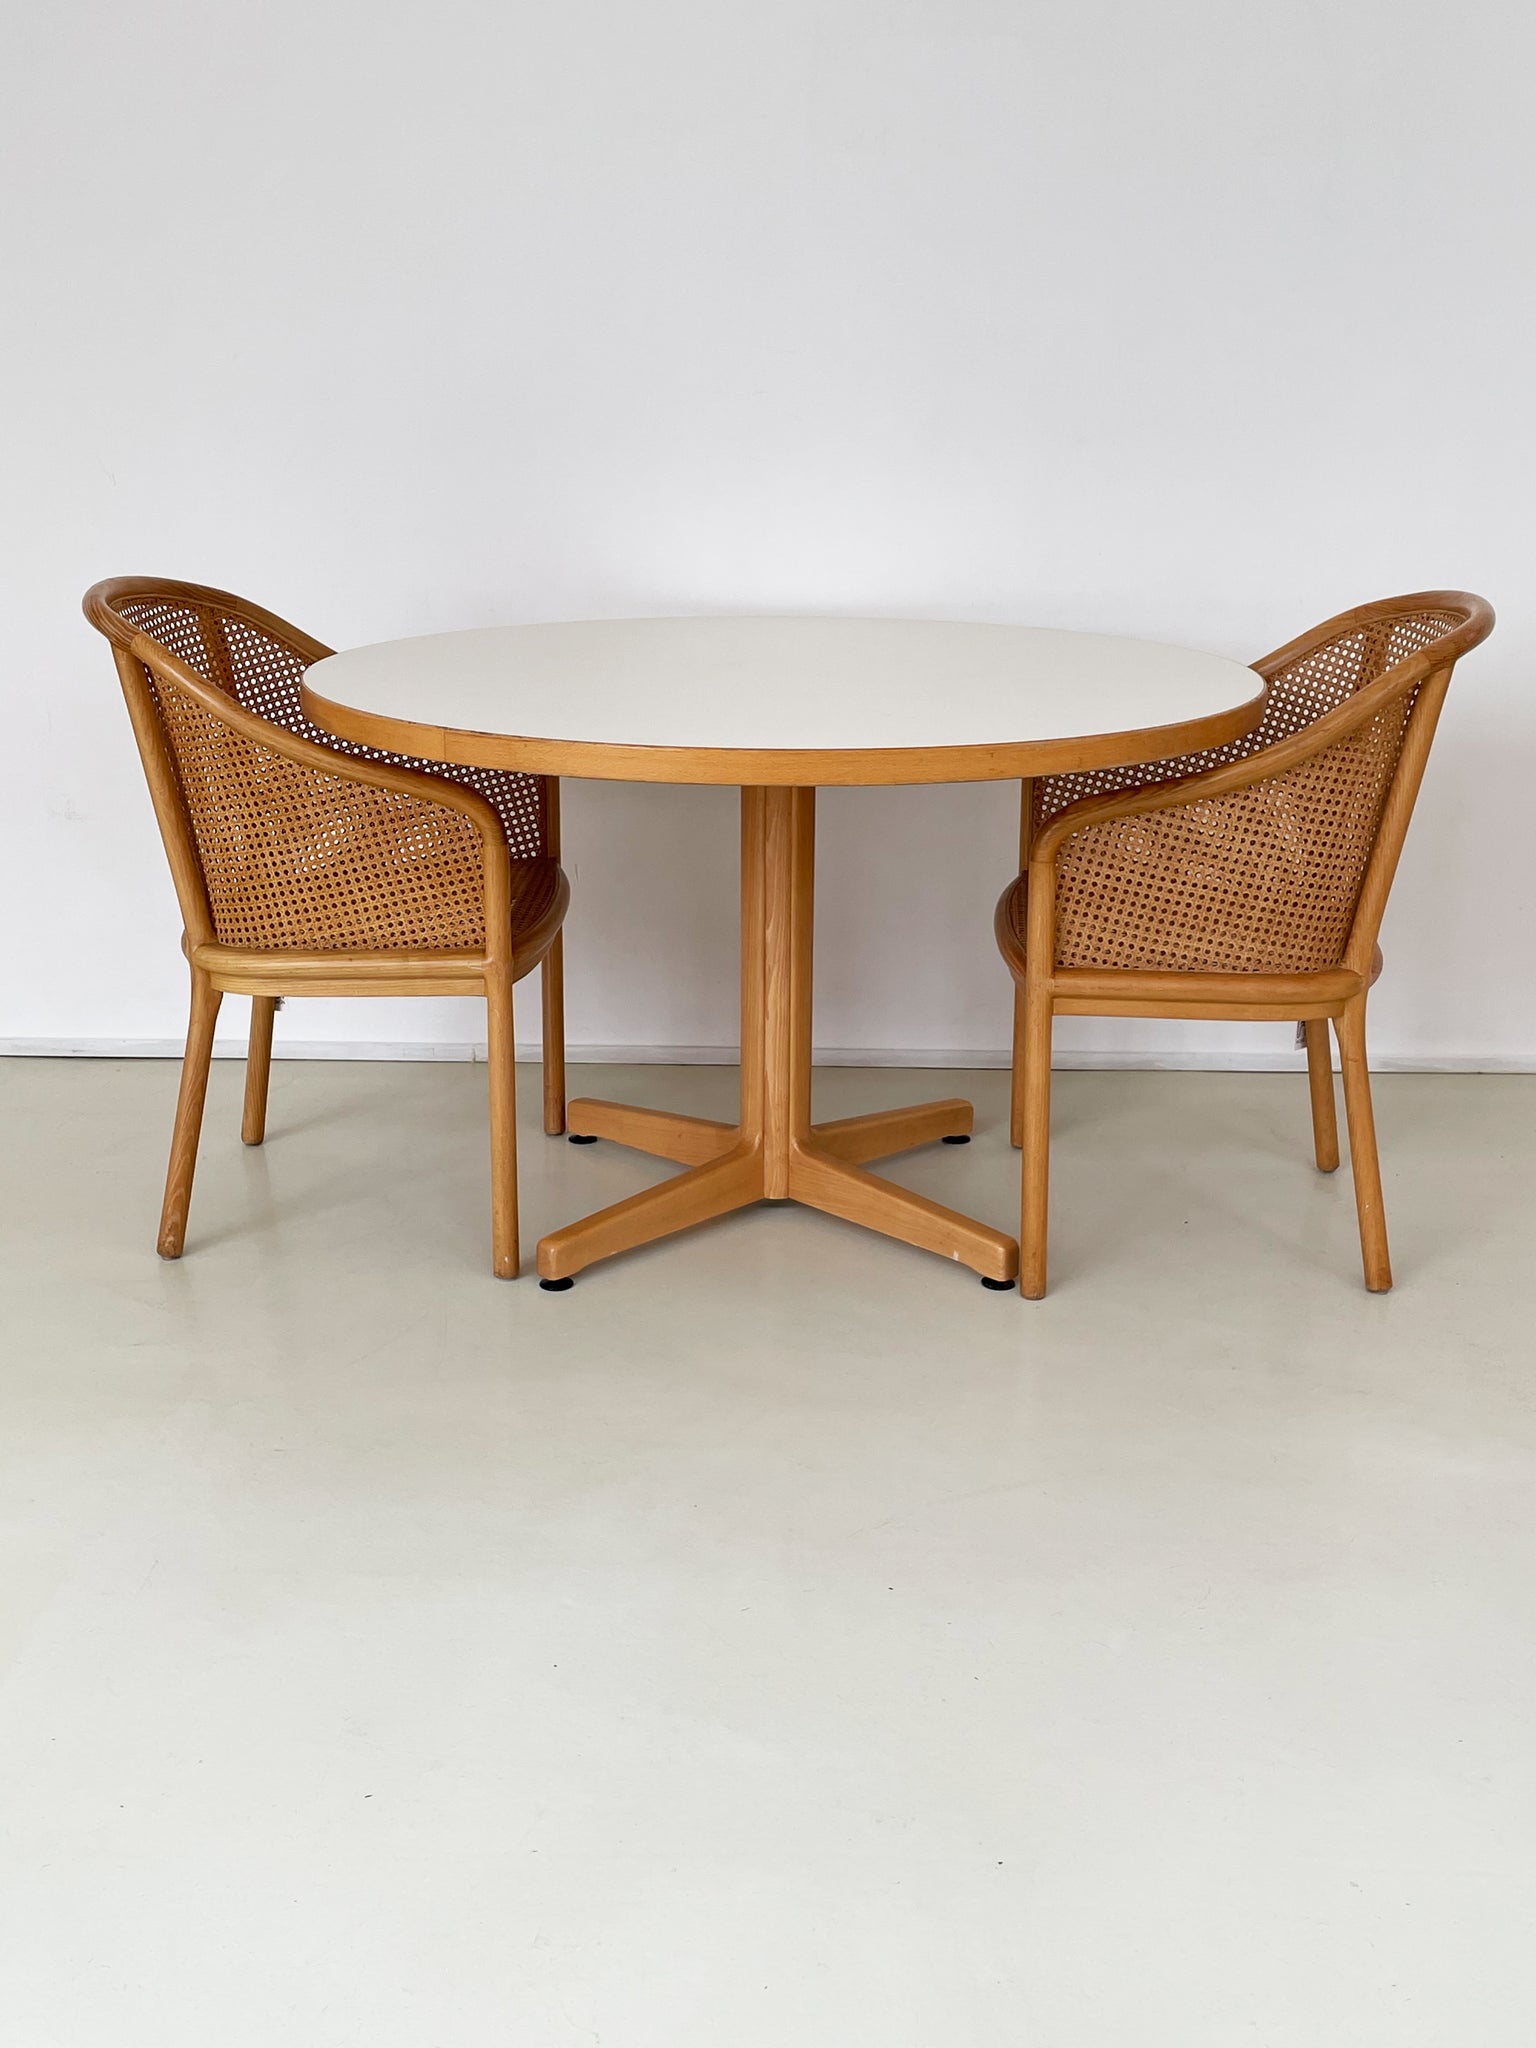 1970s Bruno Rey RoundBeech Wood Dining Table